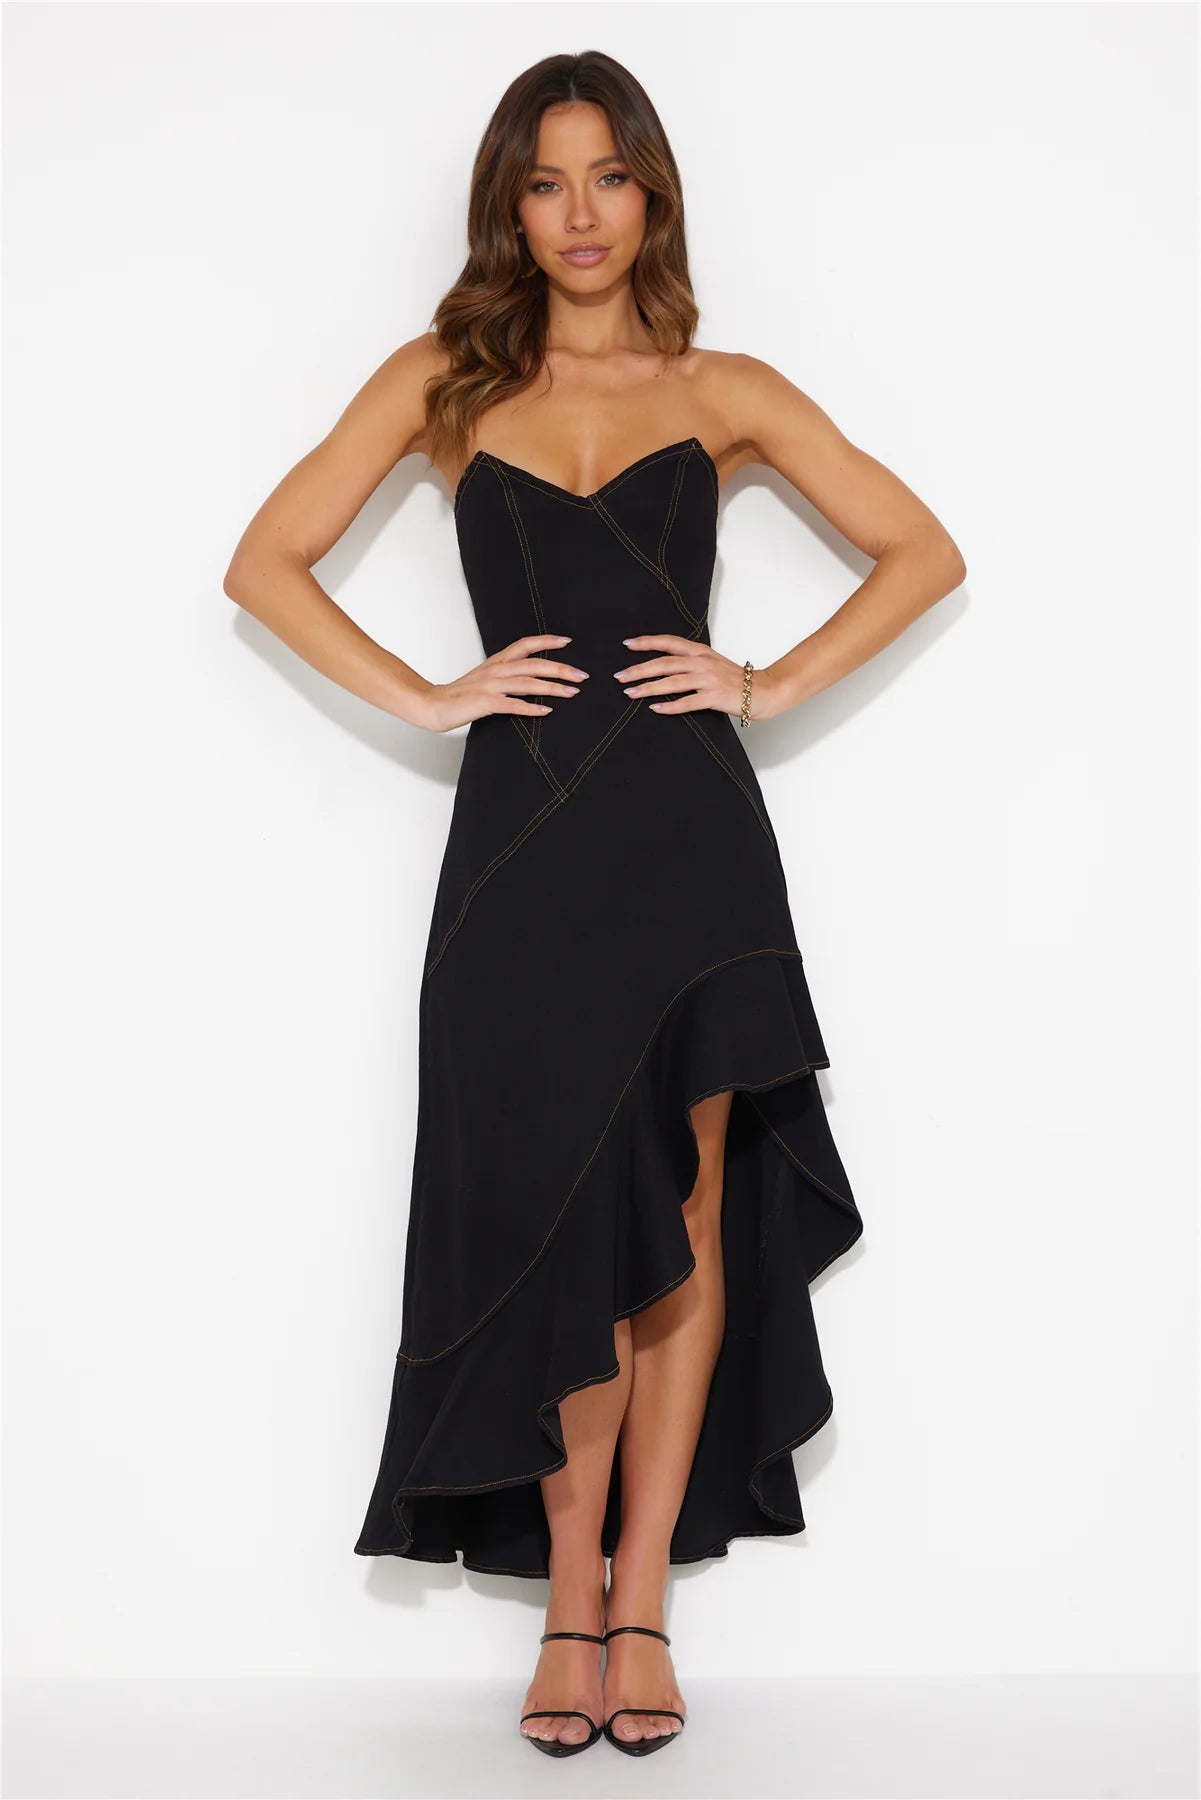 Marant Dress - Black